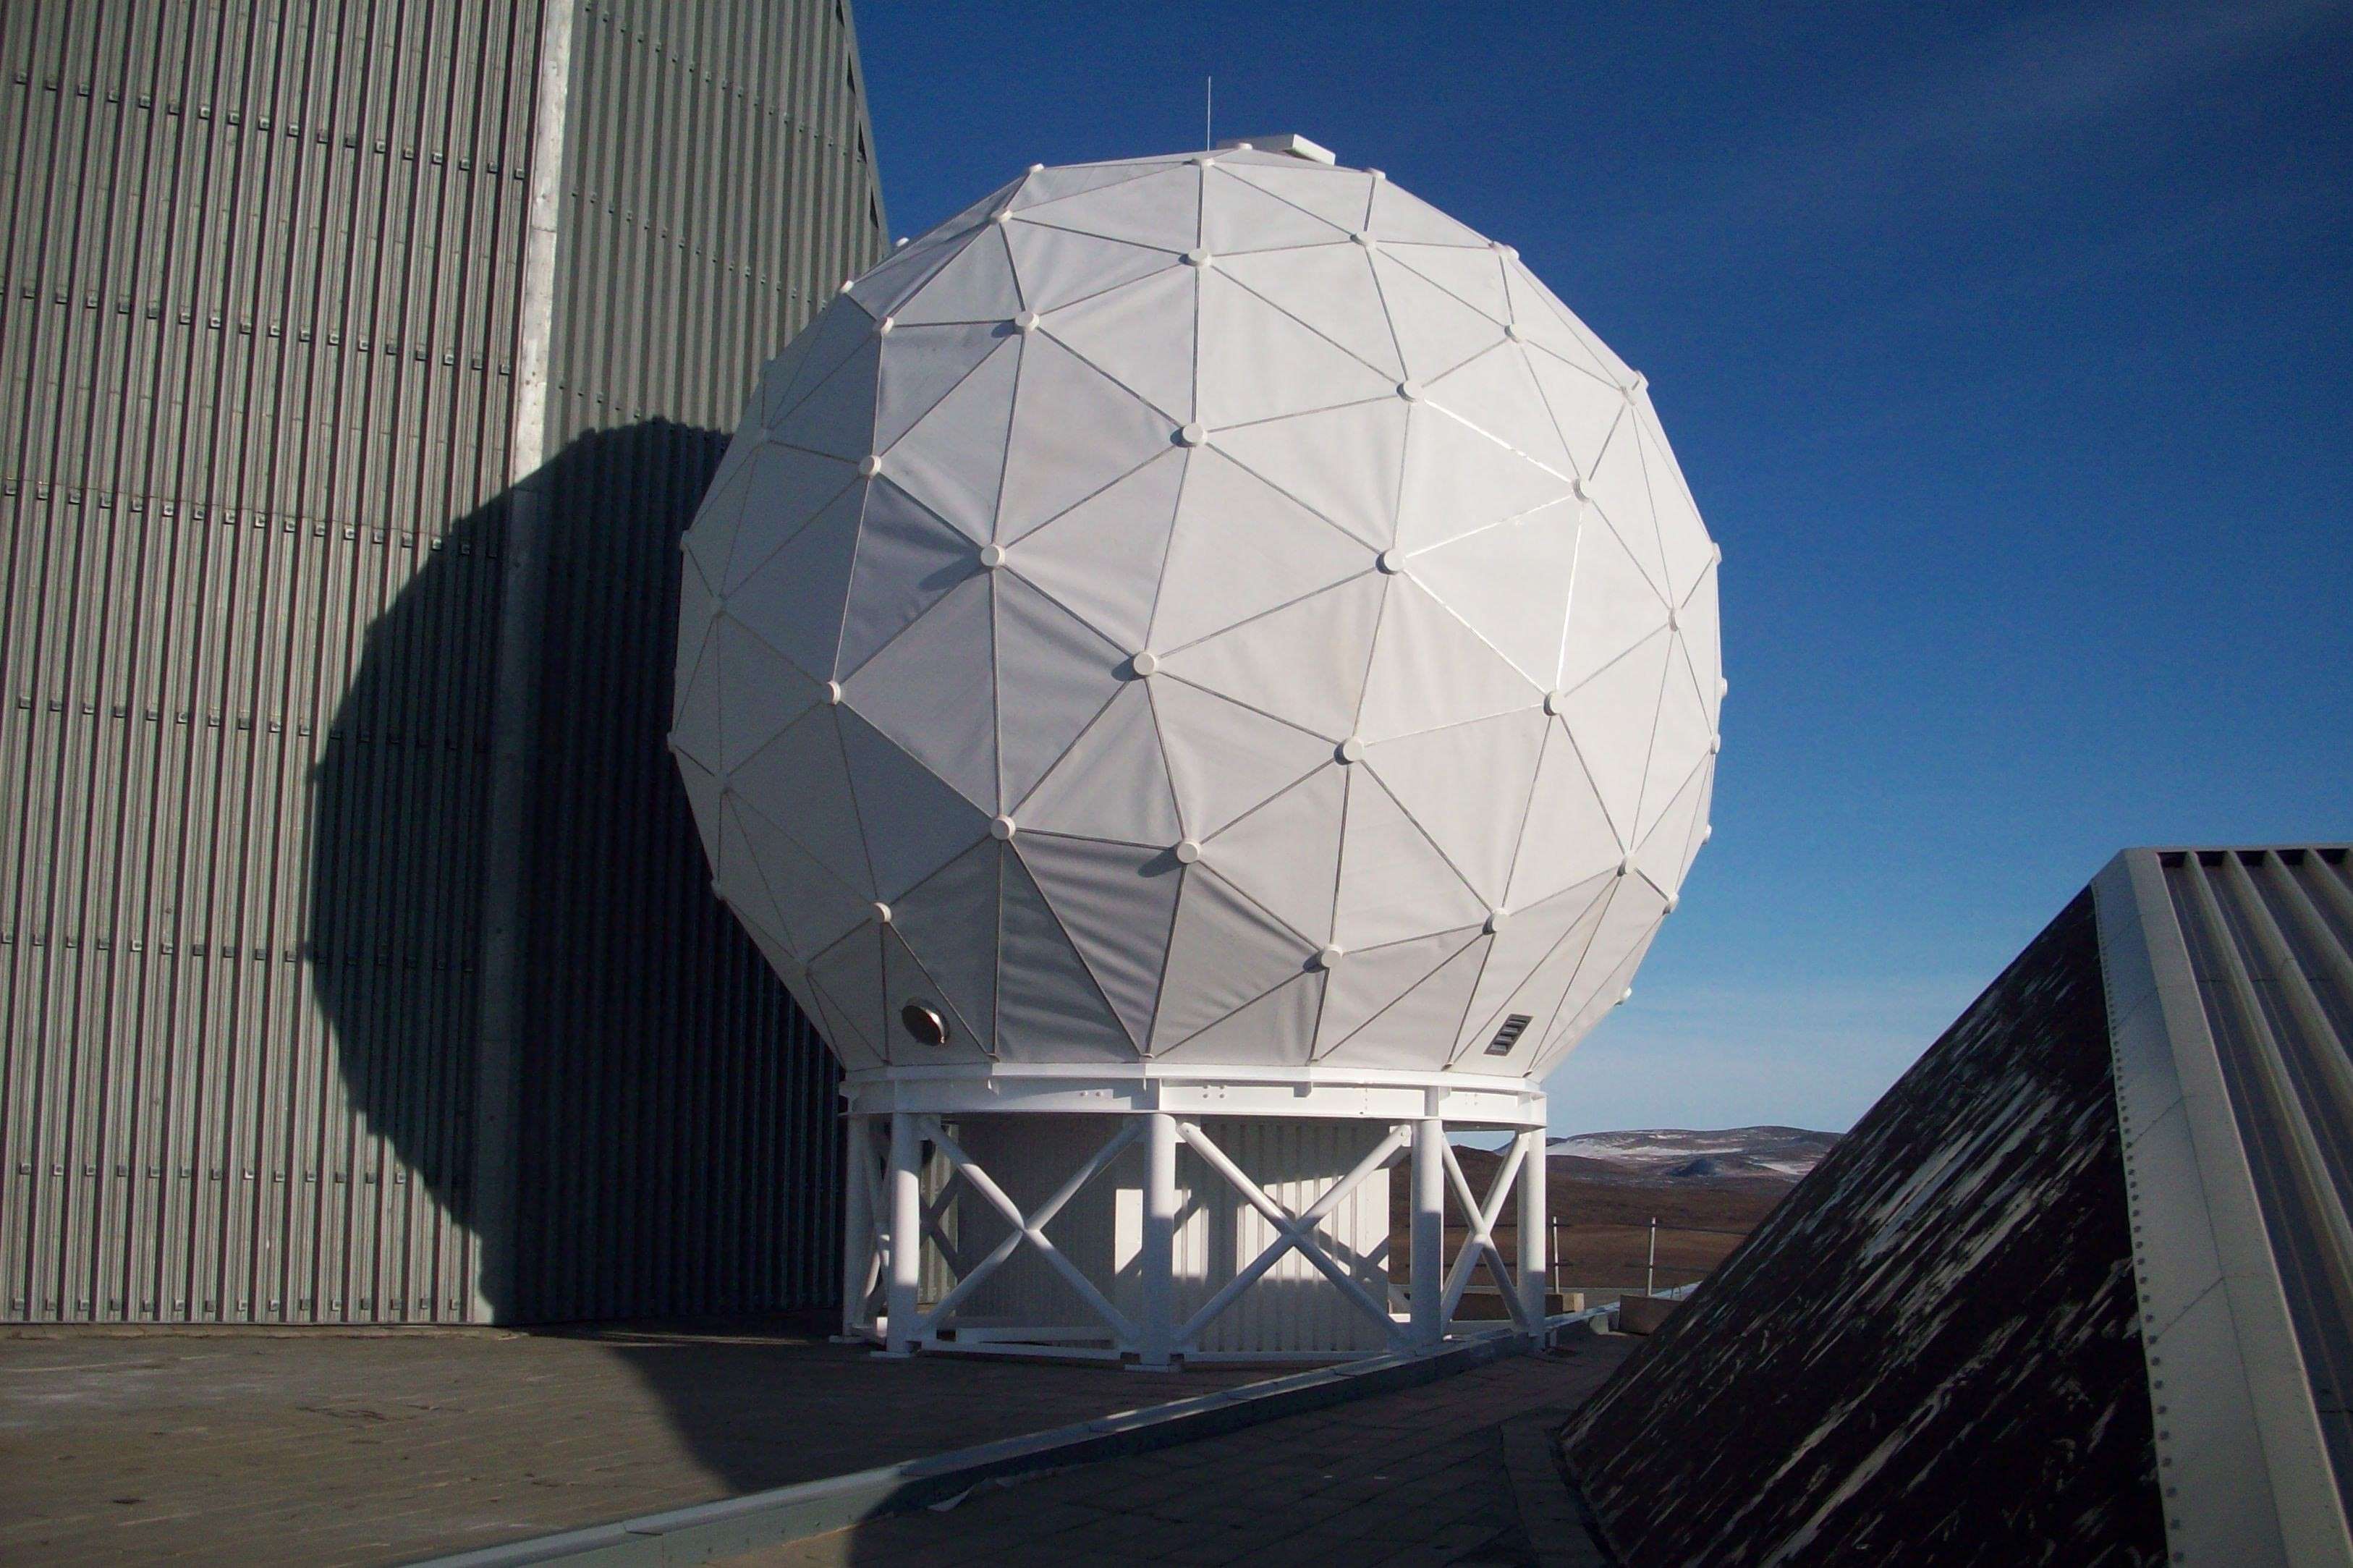 Radar Station Thule – DOD